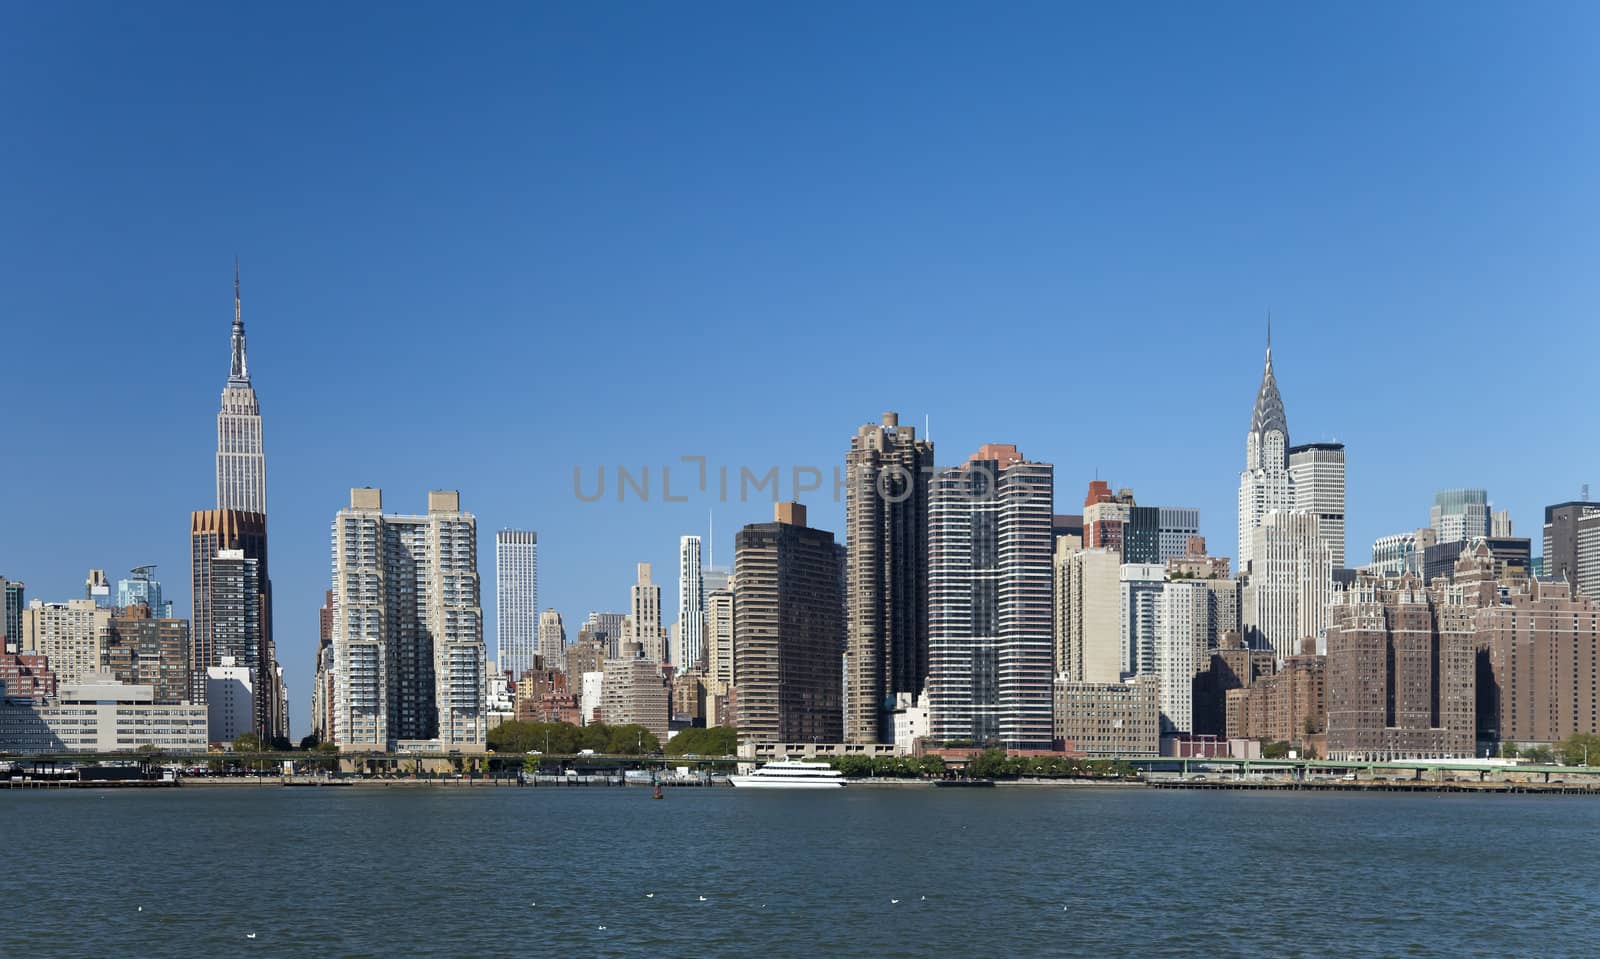 The New York City Uptown skyline by hanusst